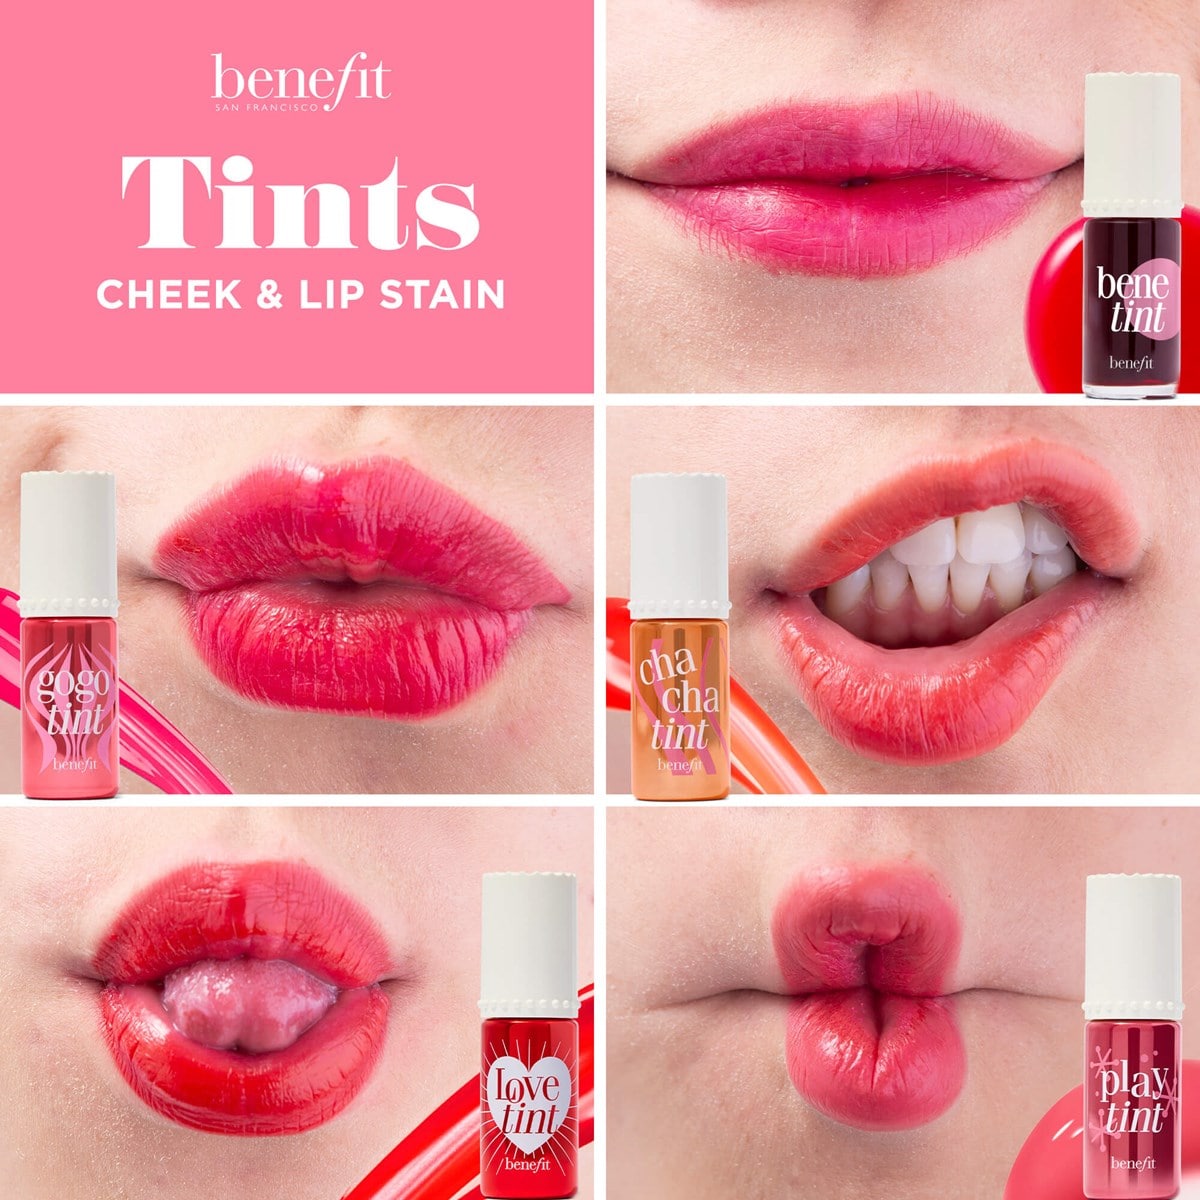 Gogotint Cheek & Lip Stain Bright cherry tinted lip & cheek stain by Benefit